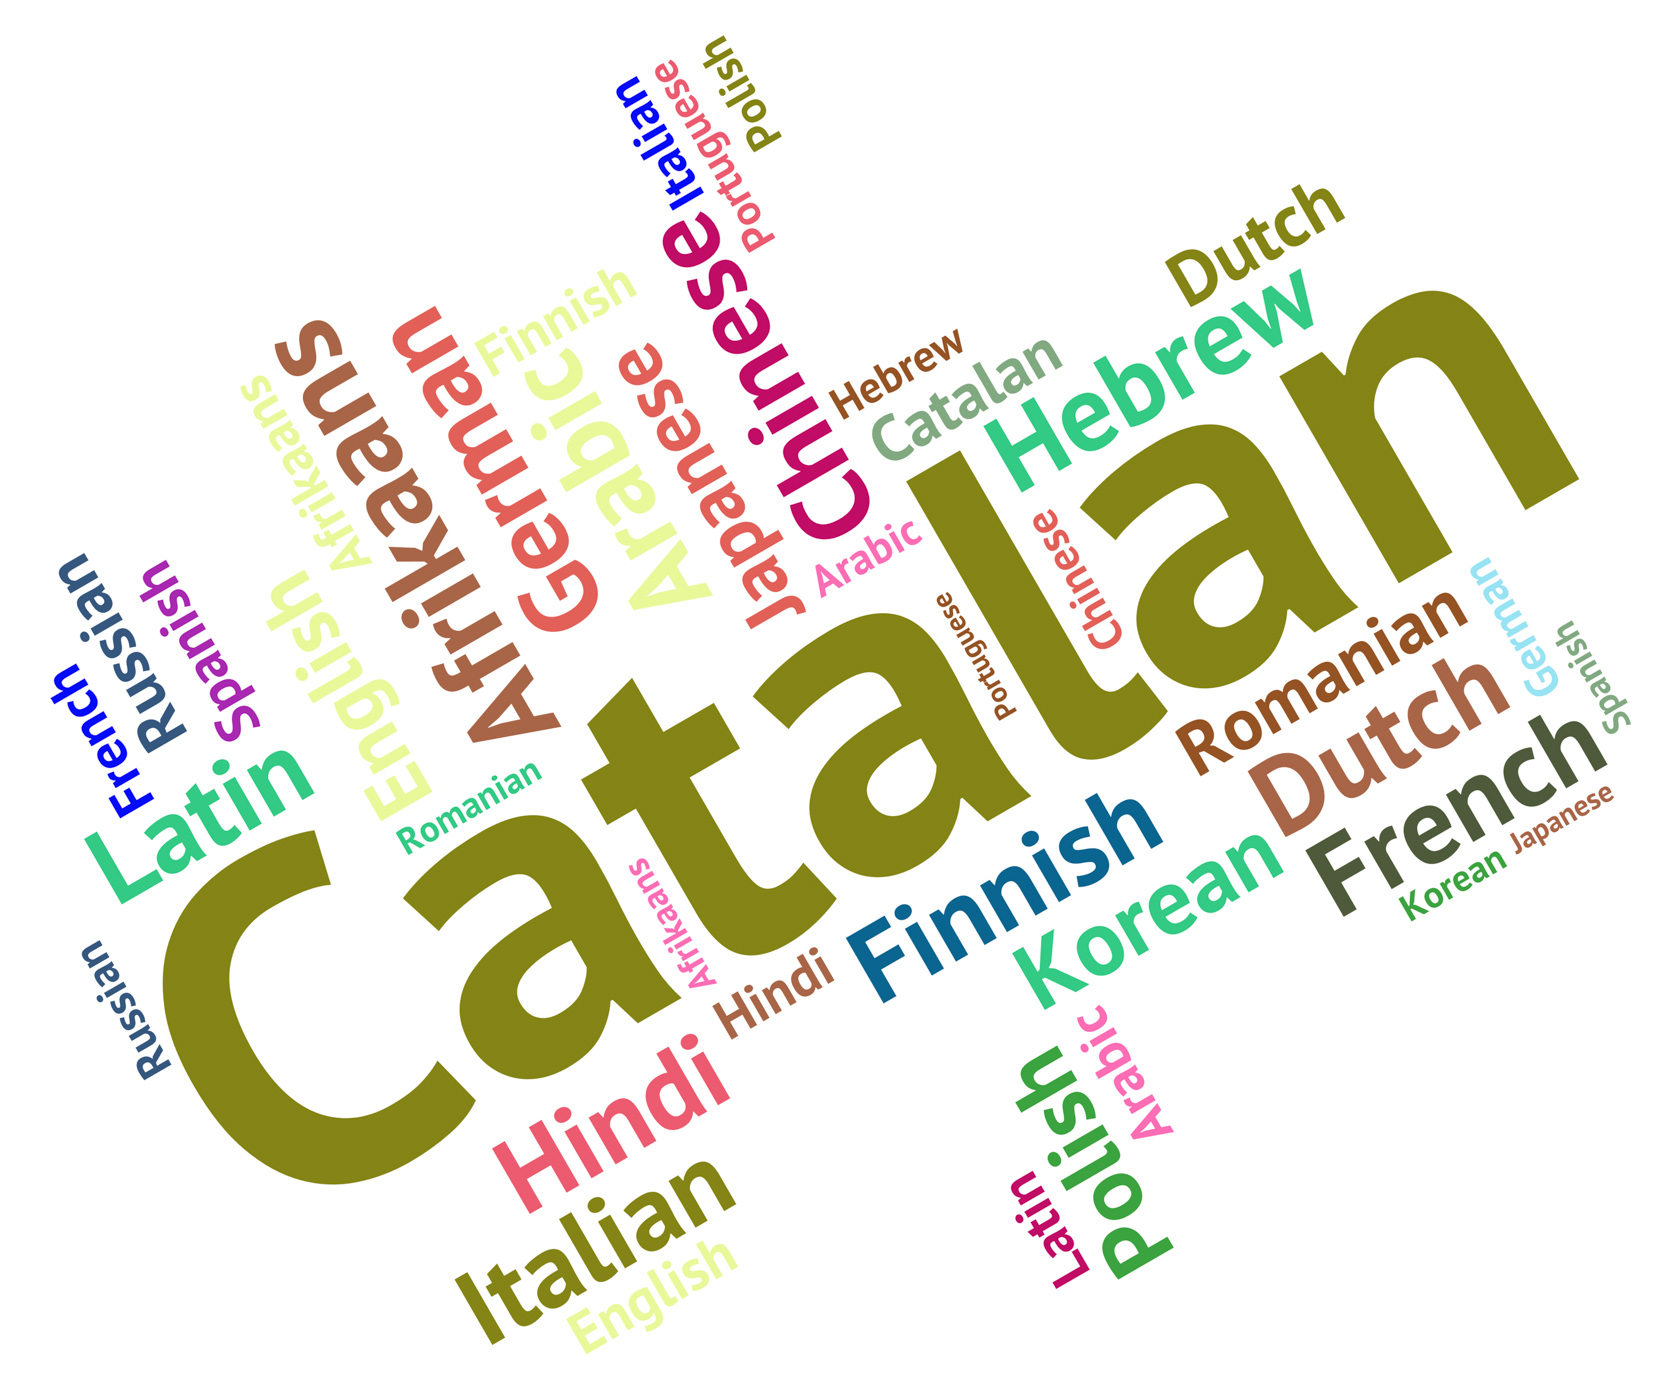 Catalan language represents word translator and international photo